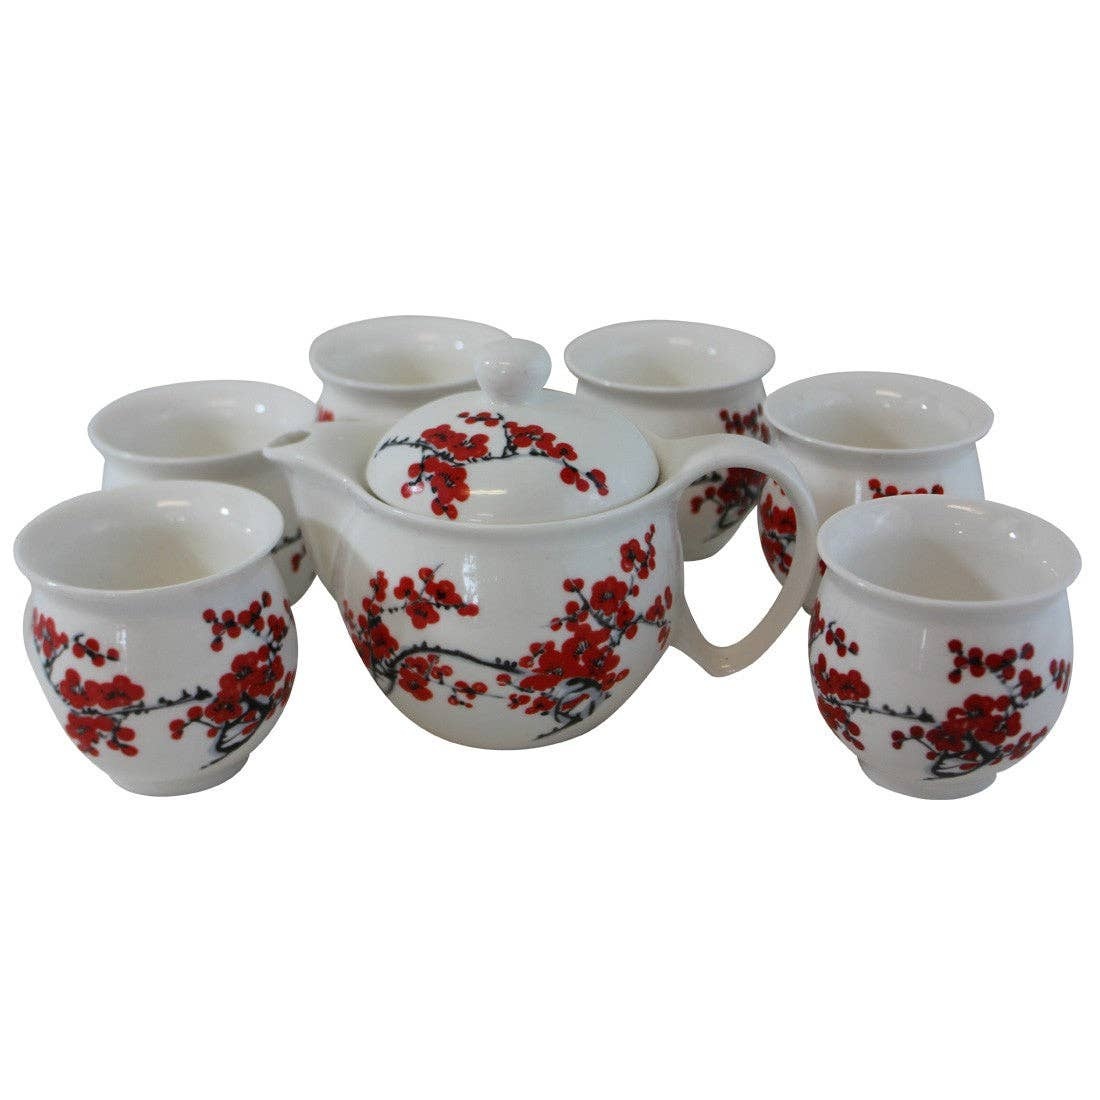 Tea Ware Tea Set - Cherry Blossom - 6 Cups